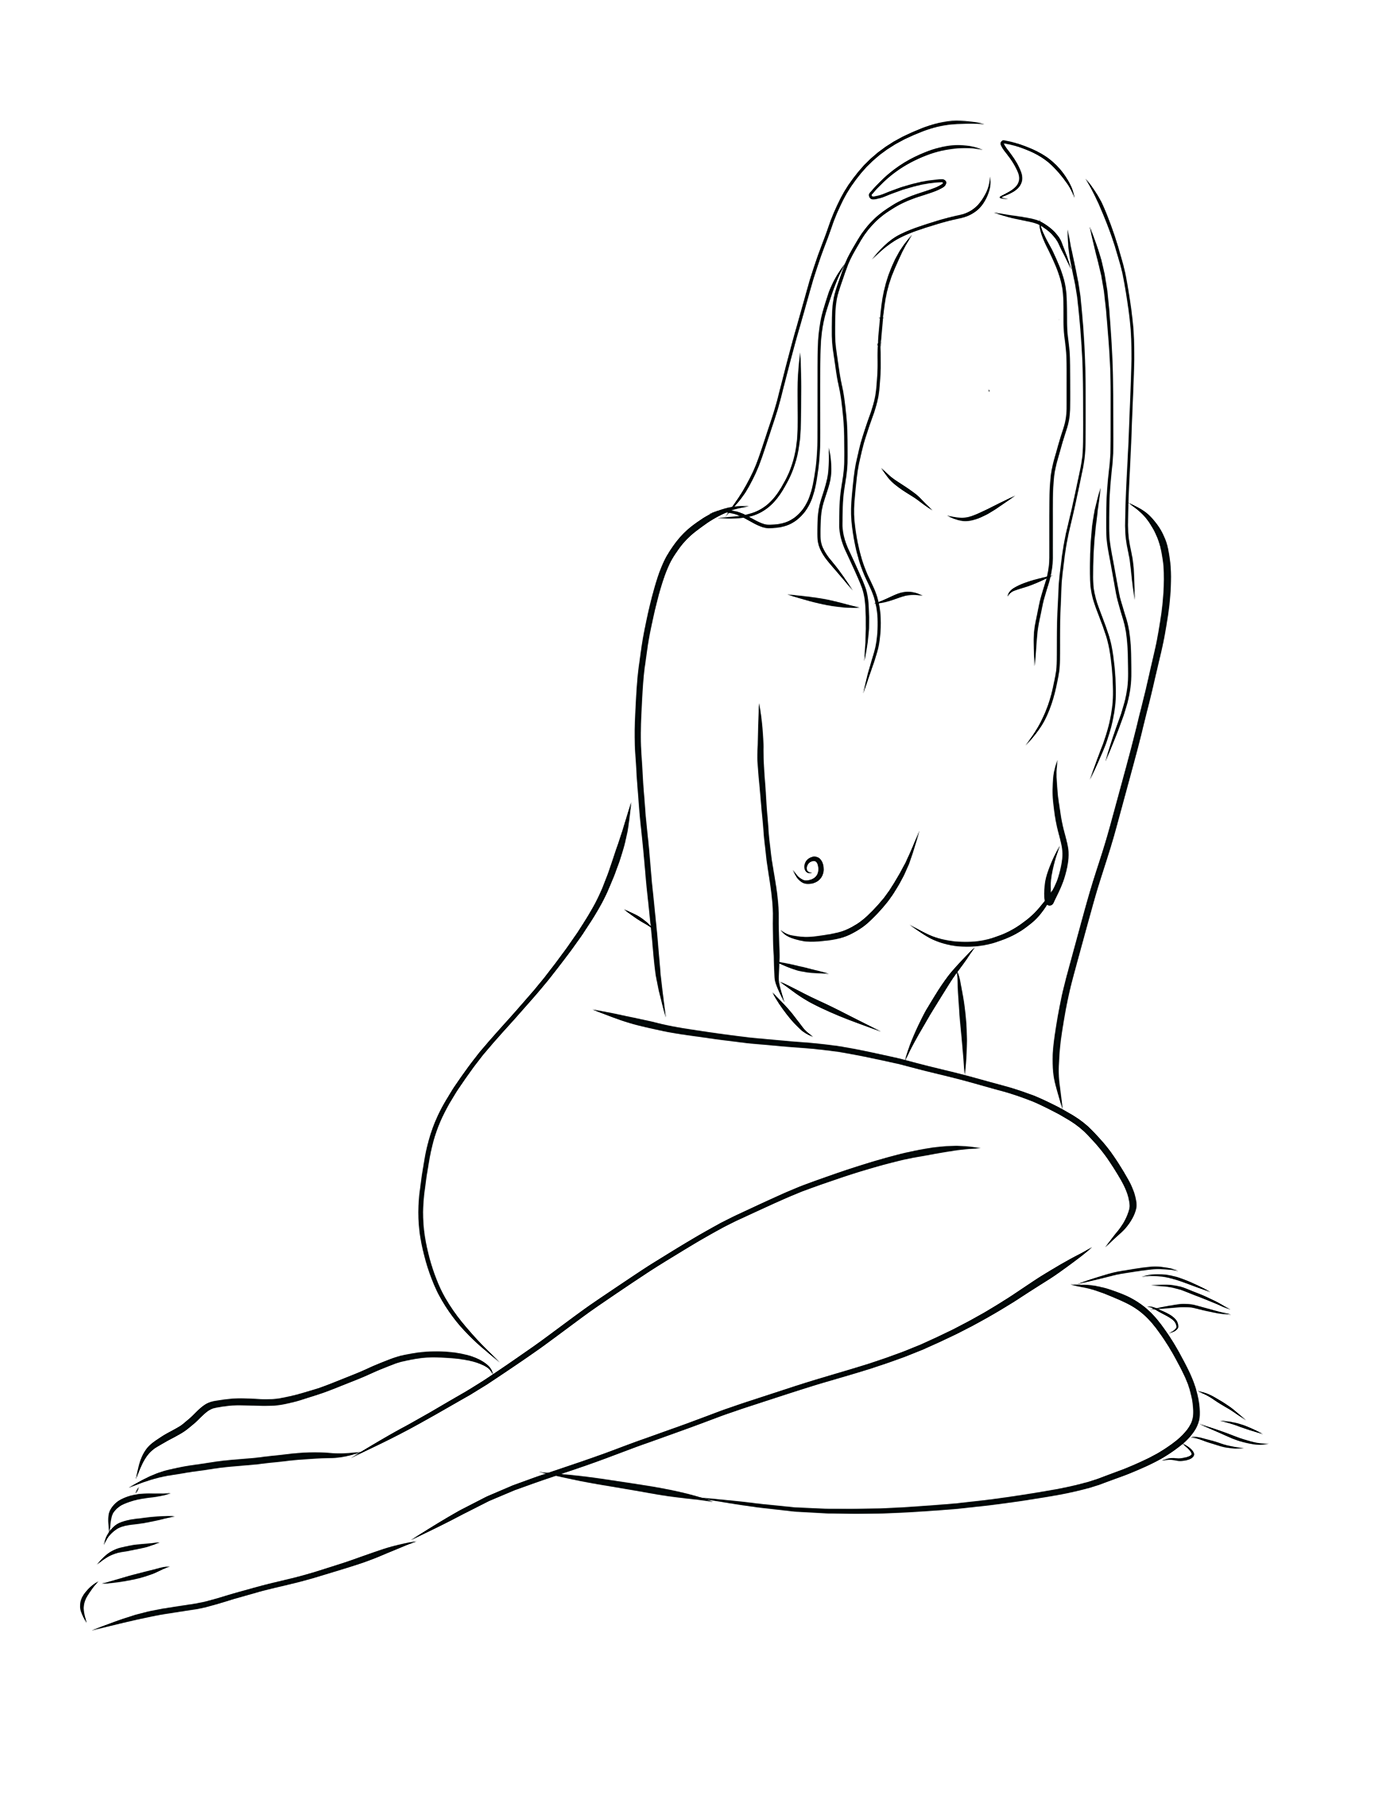 Digital Art  Drawing  ILLUSTRATION  line art Nude Model nudeart nudes nudity portrait sketch